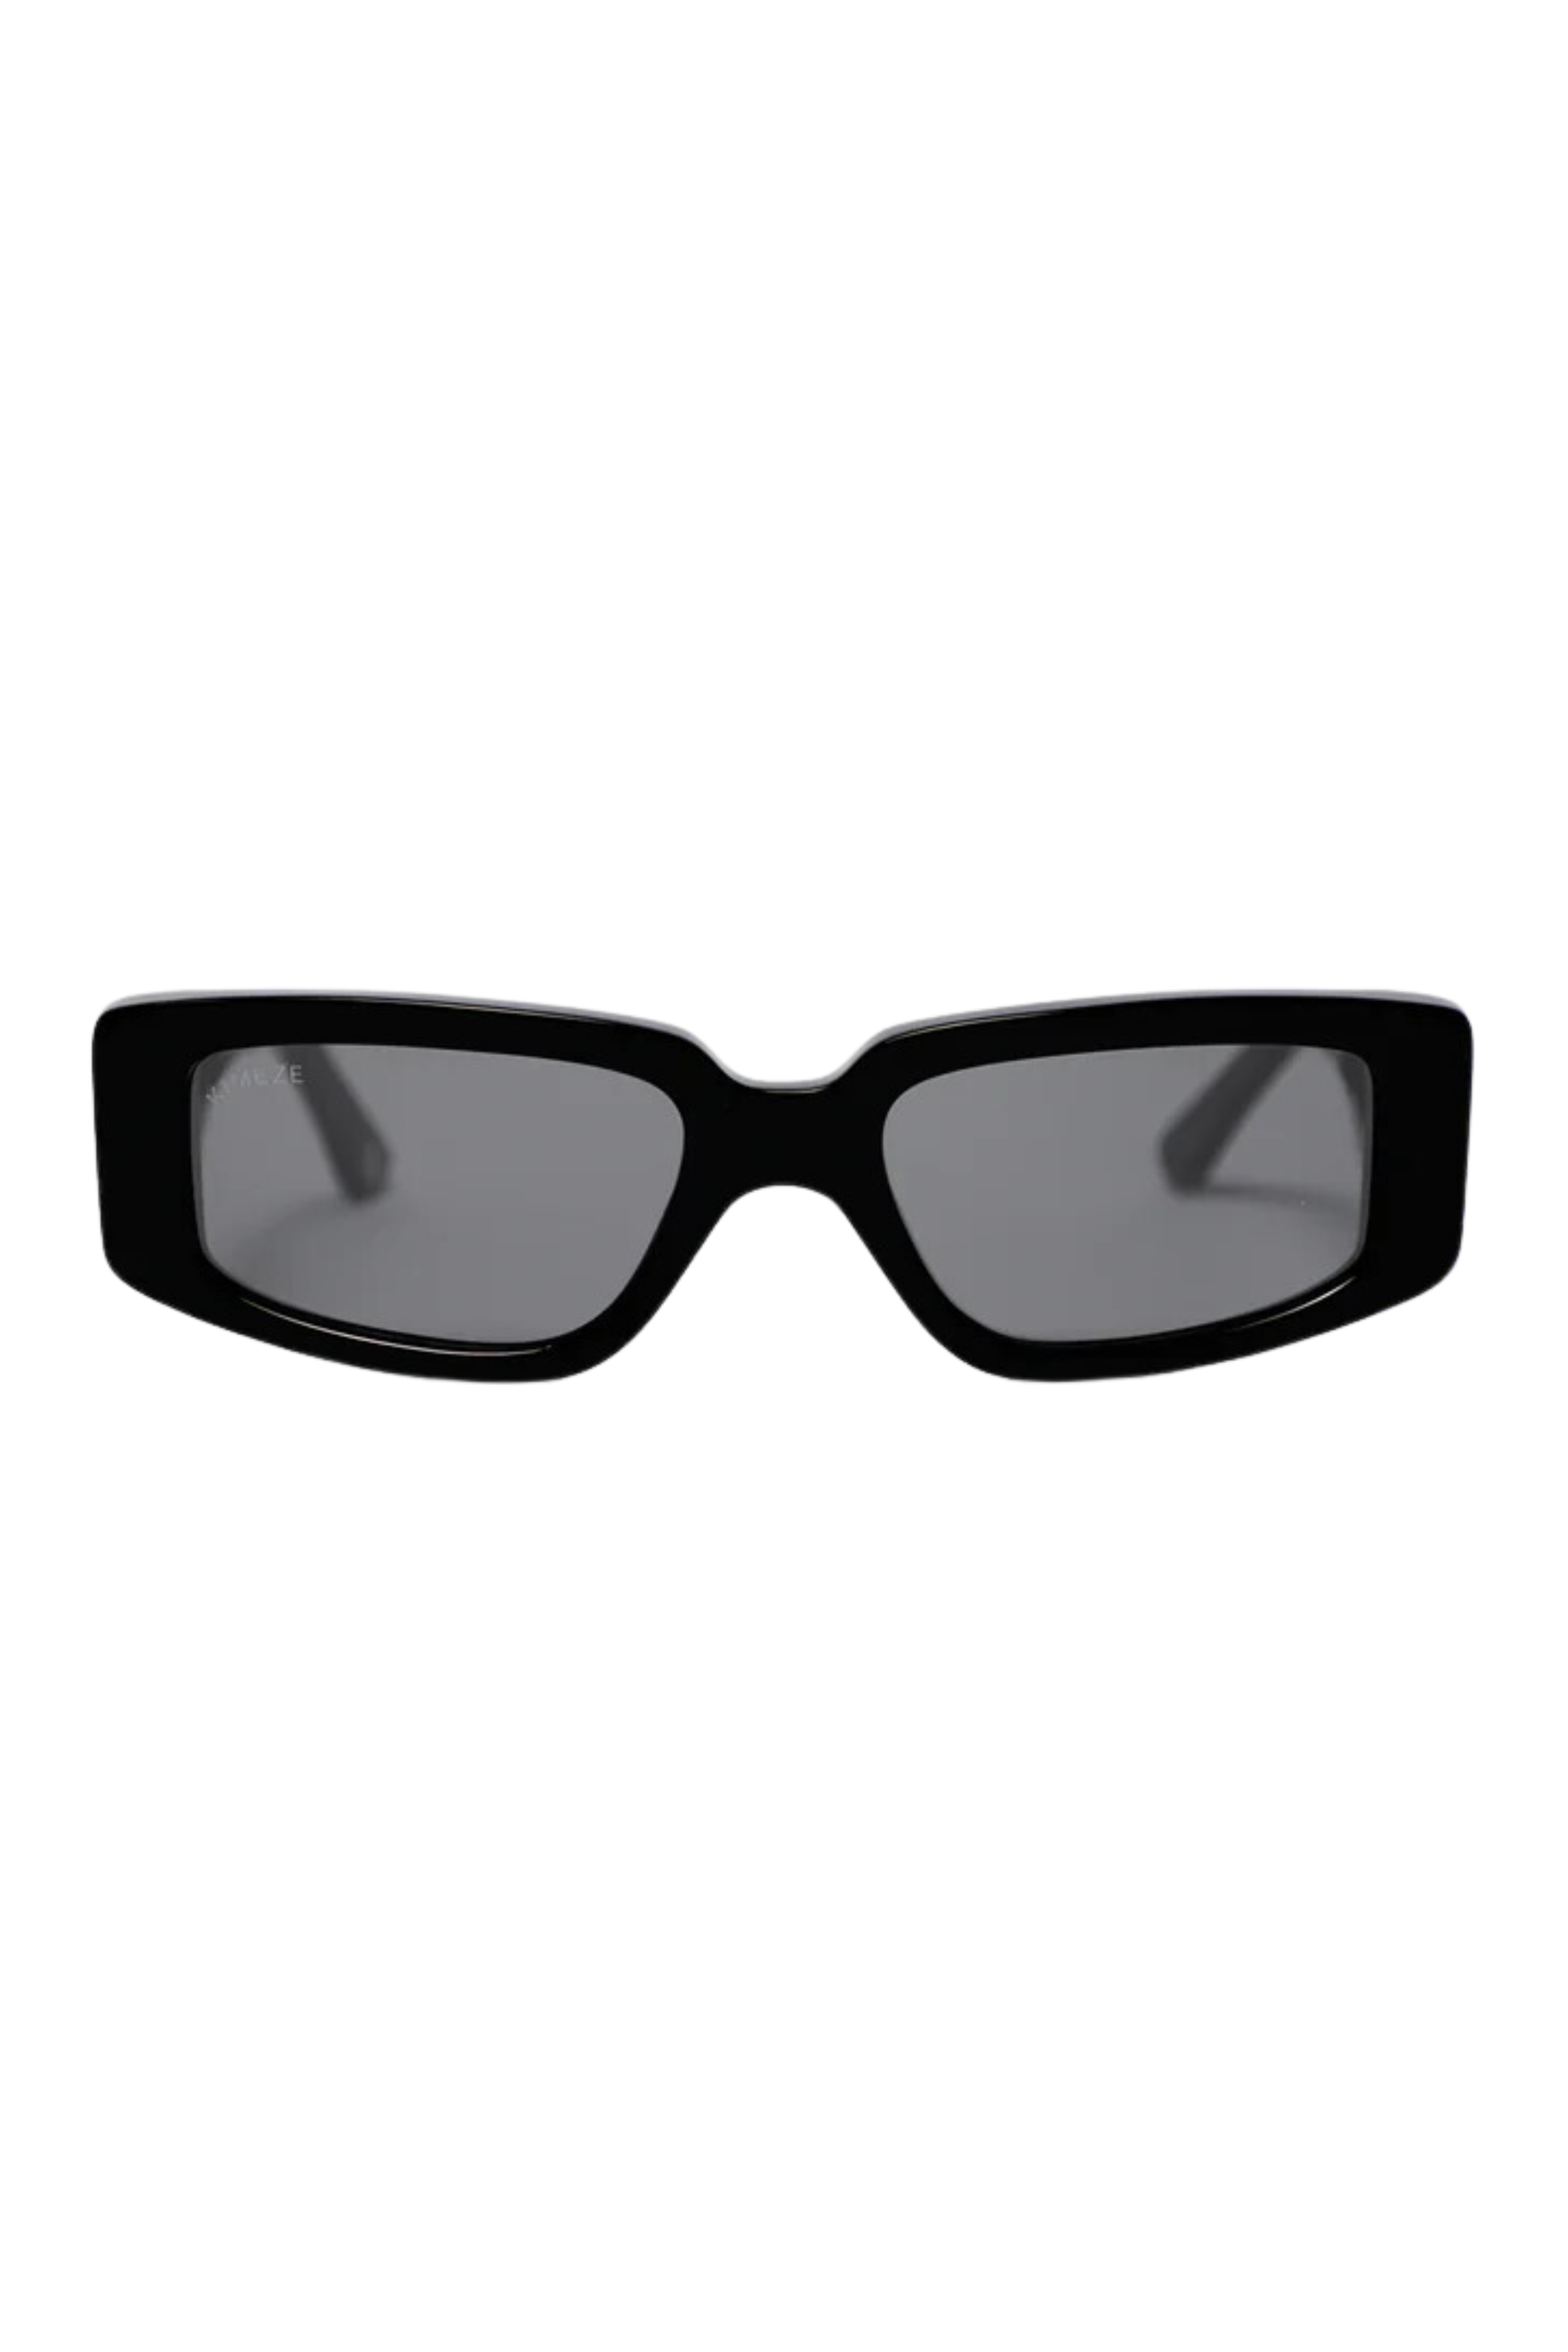 KIMEZE Concept 2 Black Sunglasses